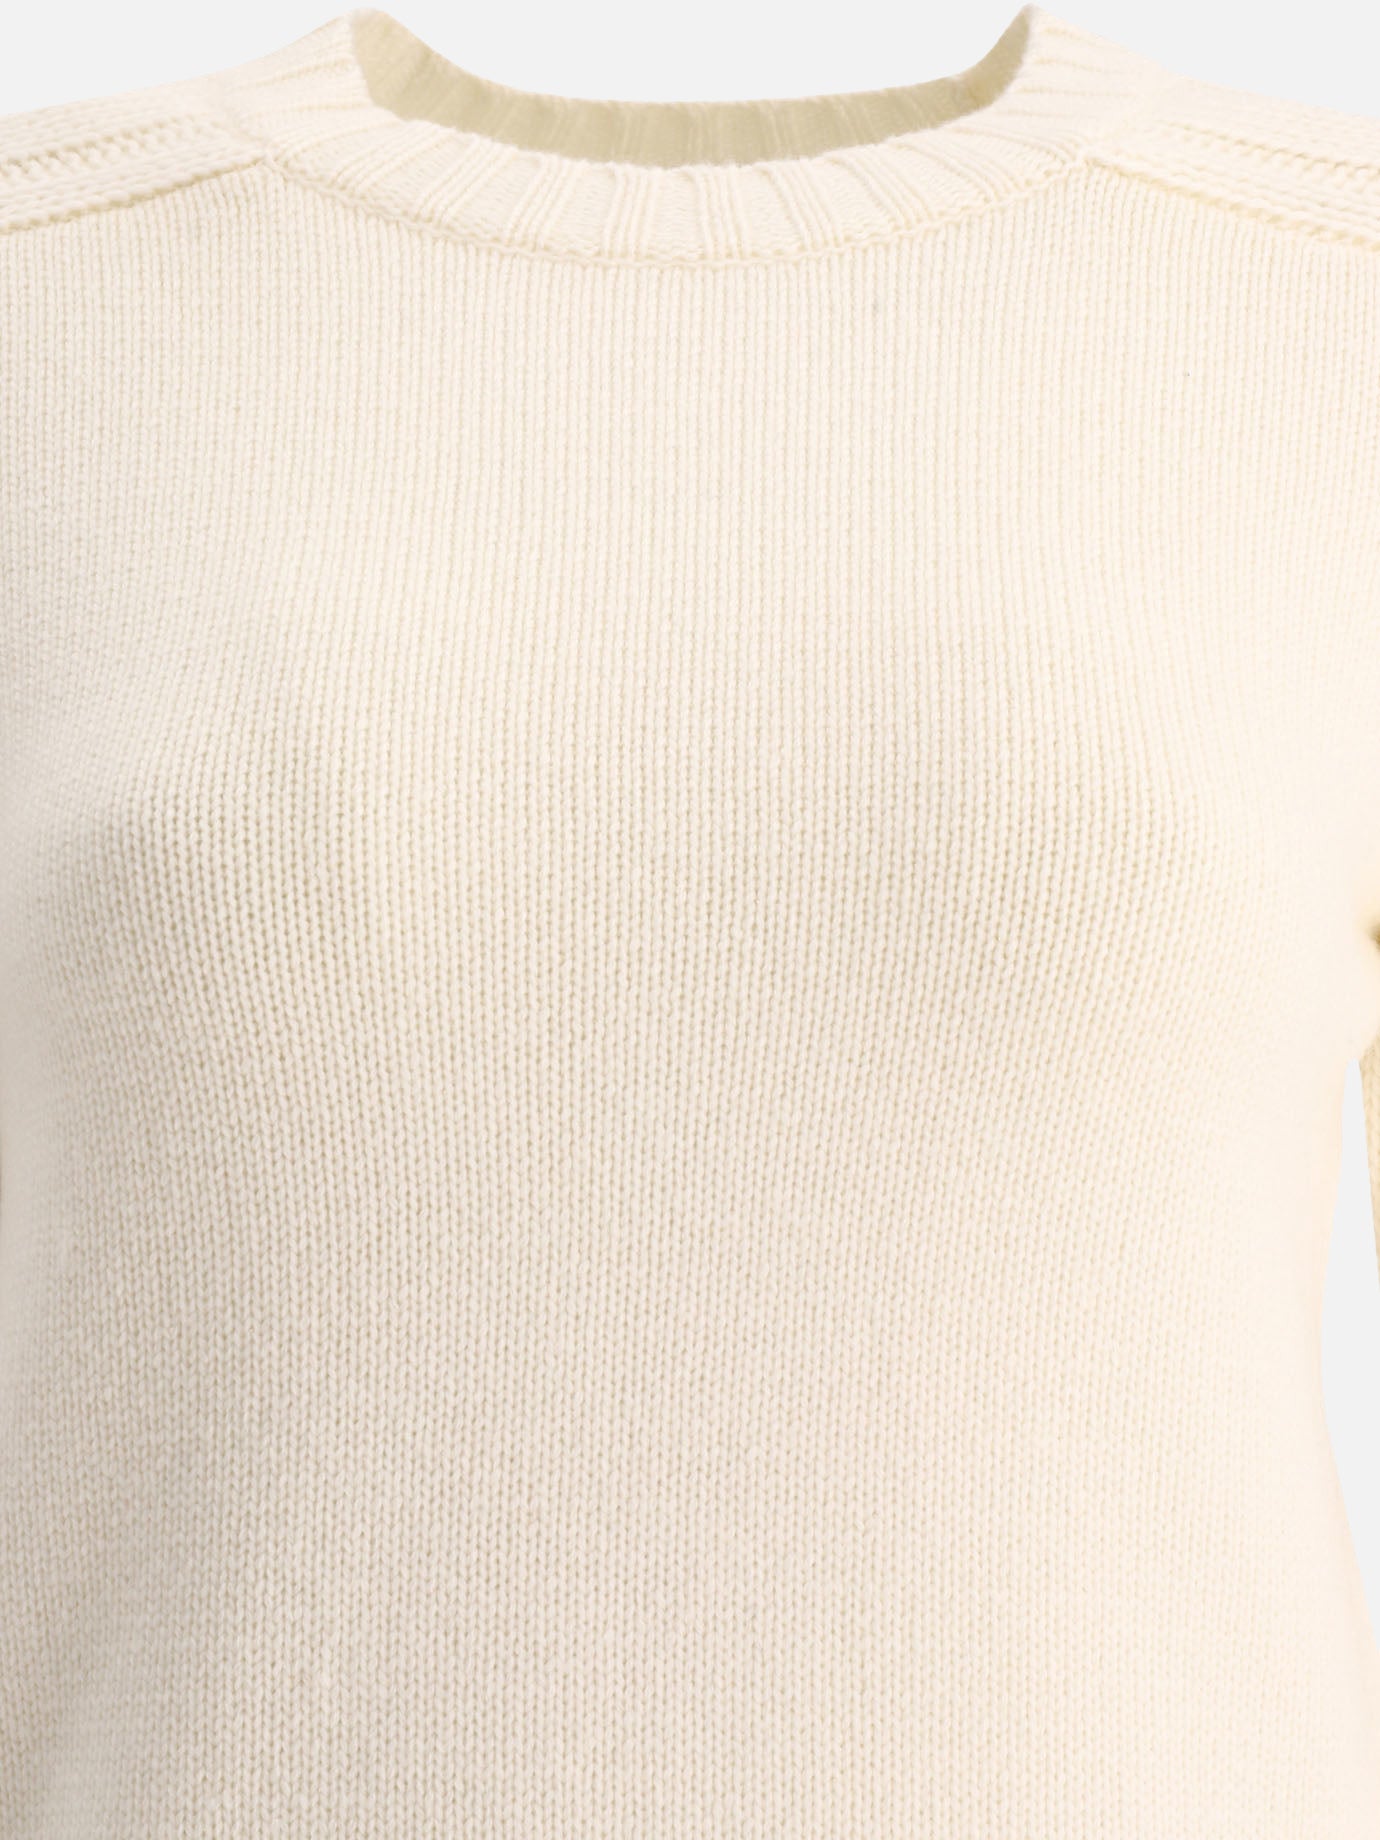 "Berlina" cashmere sweater